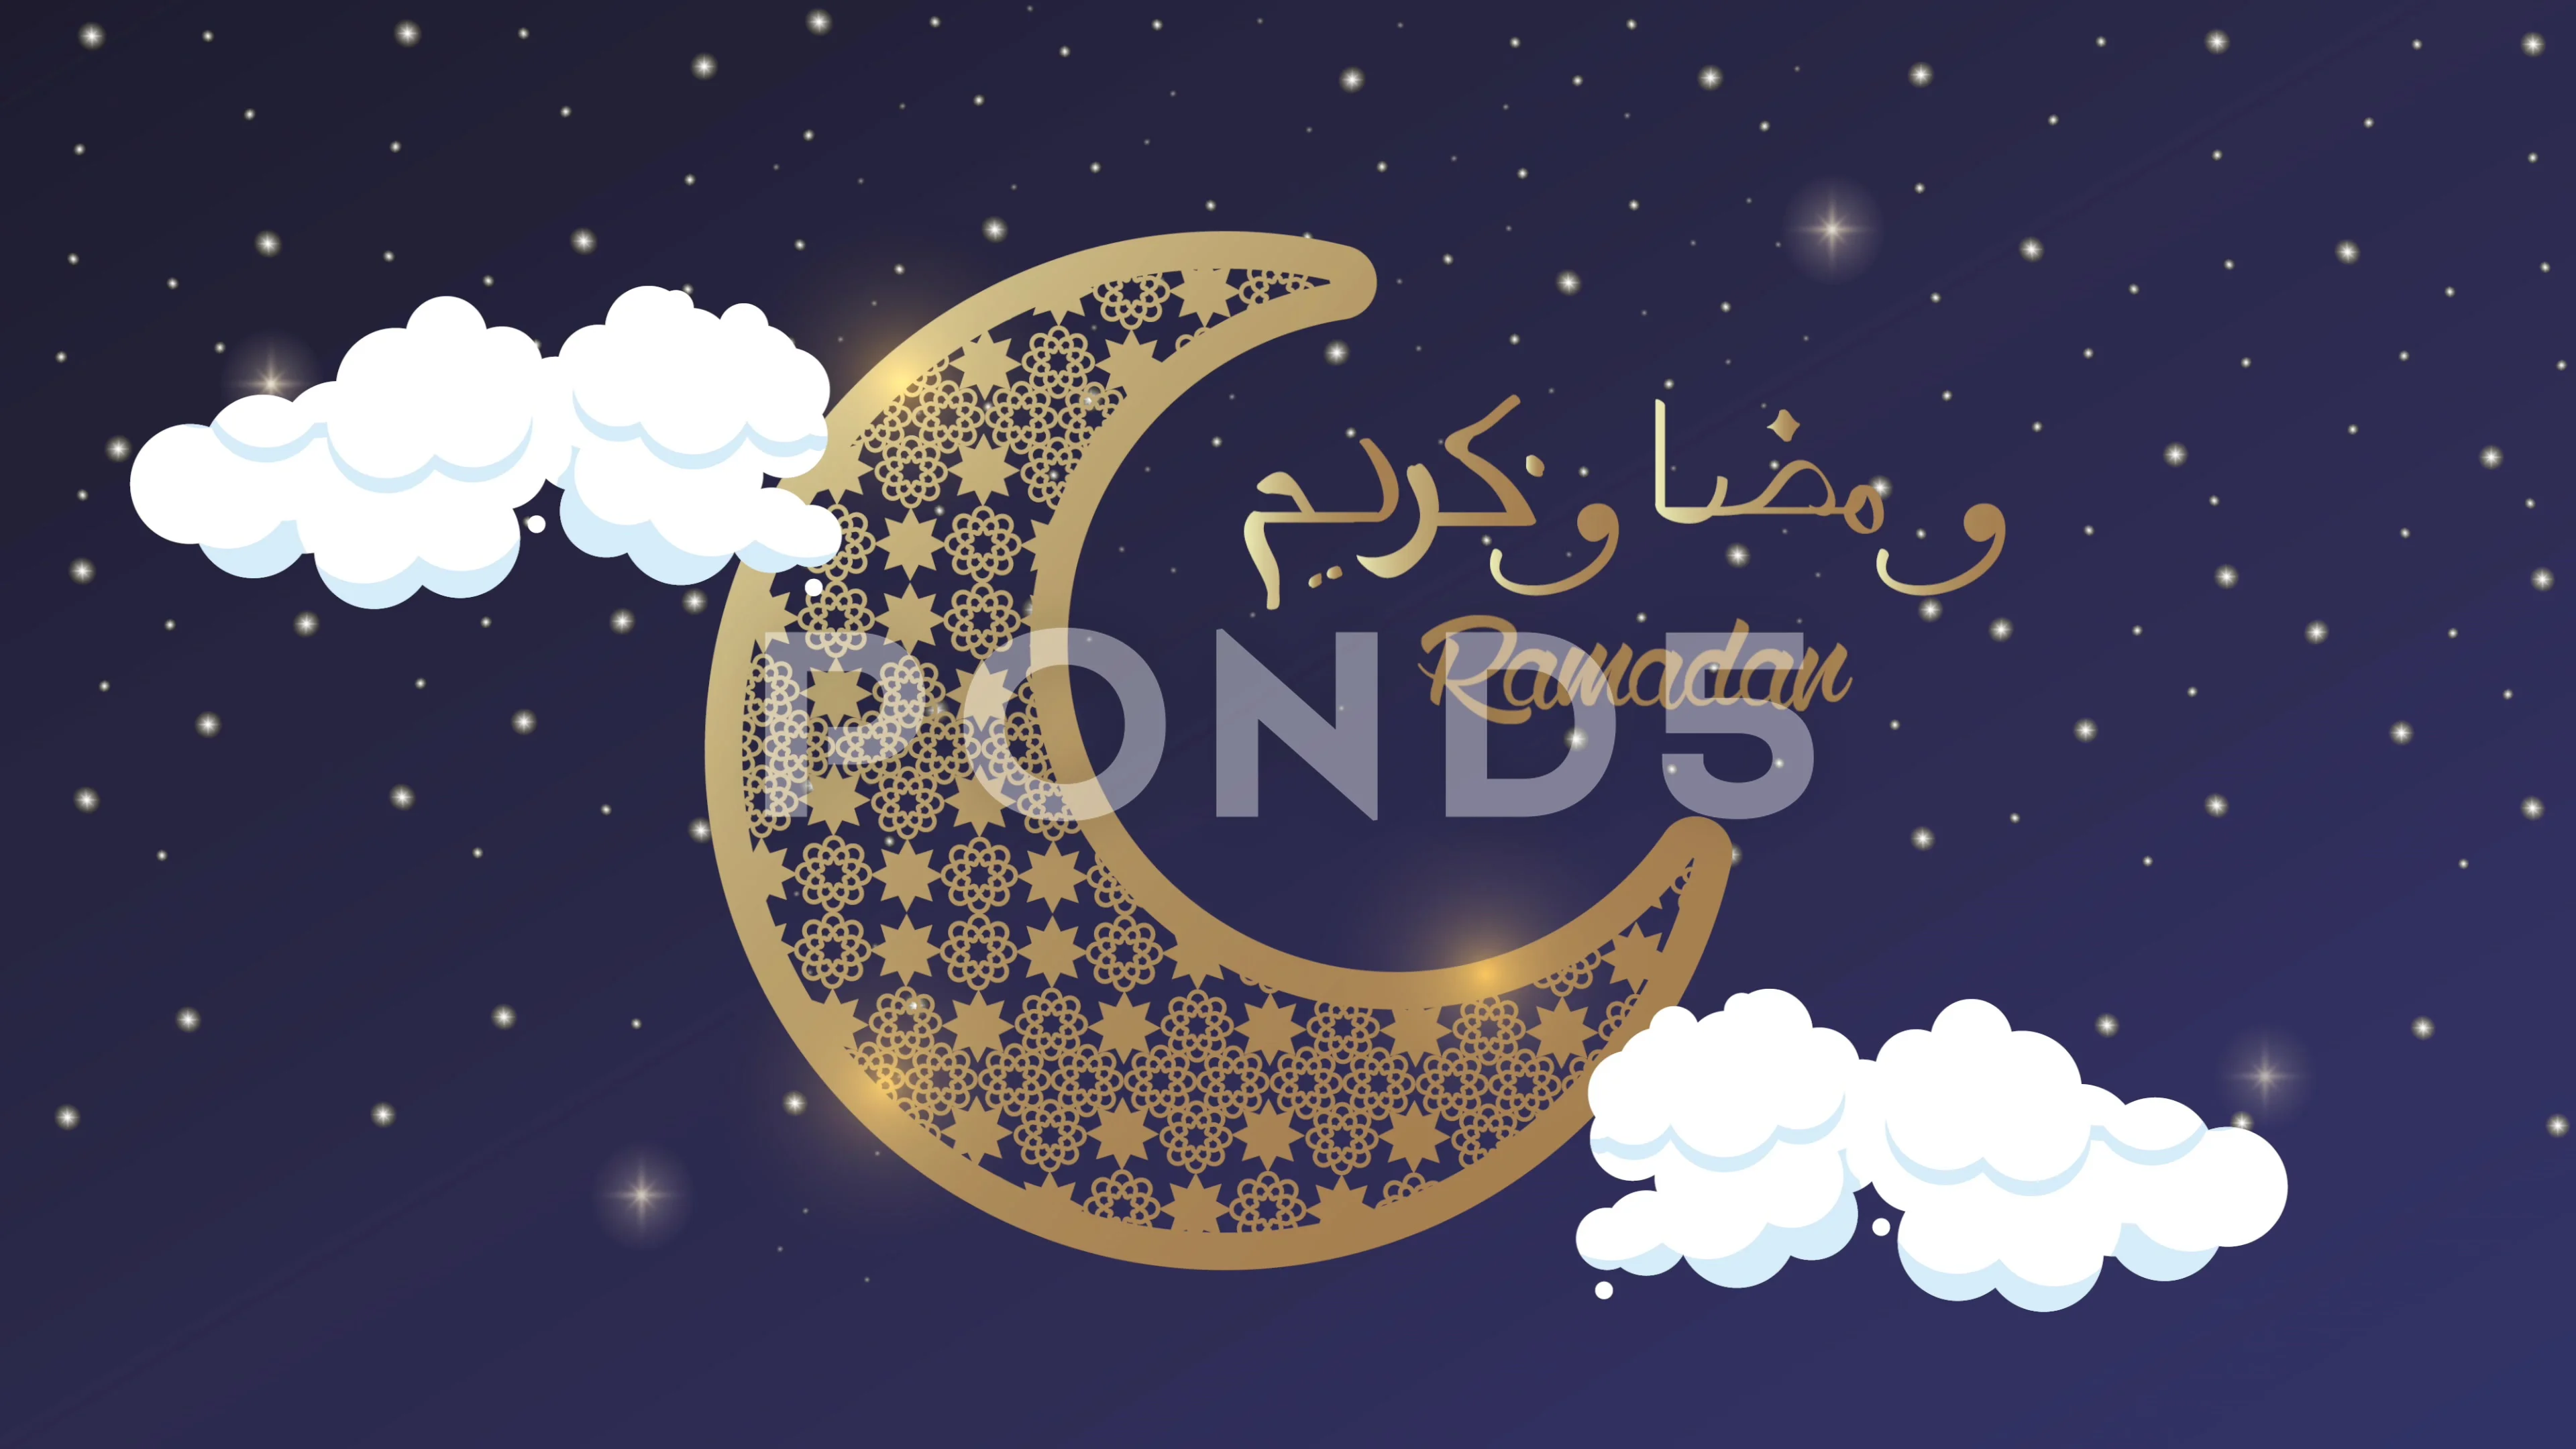 the golden crescent moon, Ramadan Kareem celebration with golden